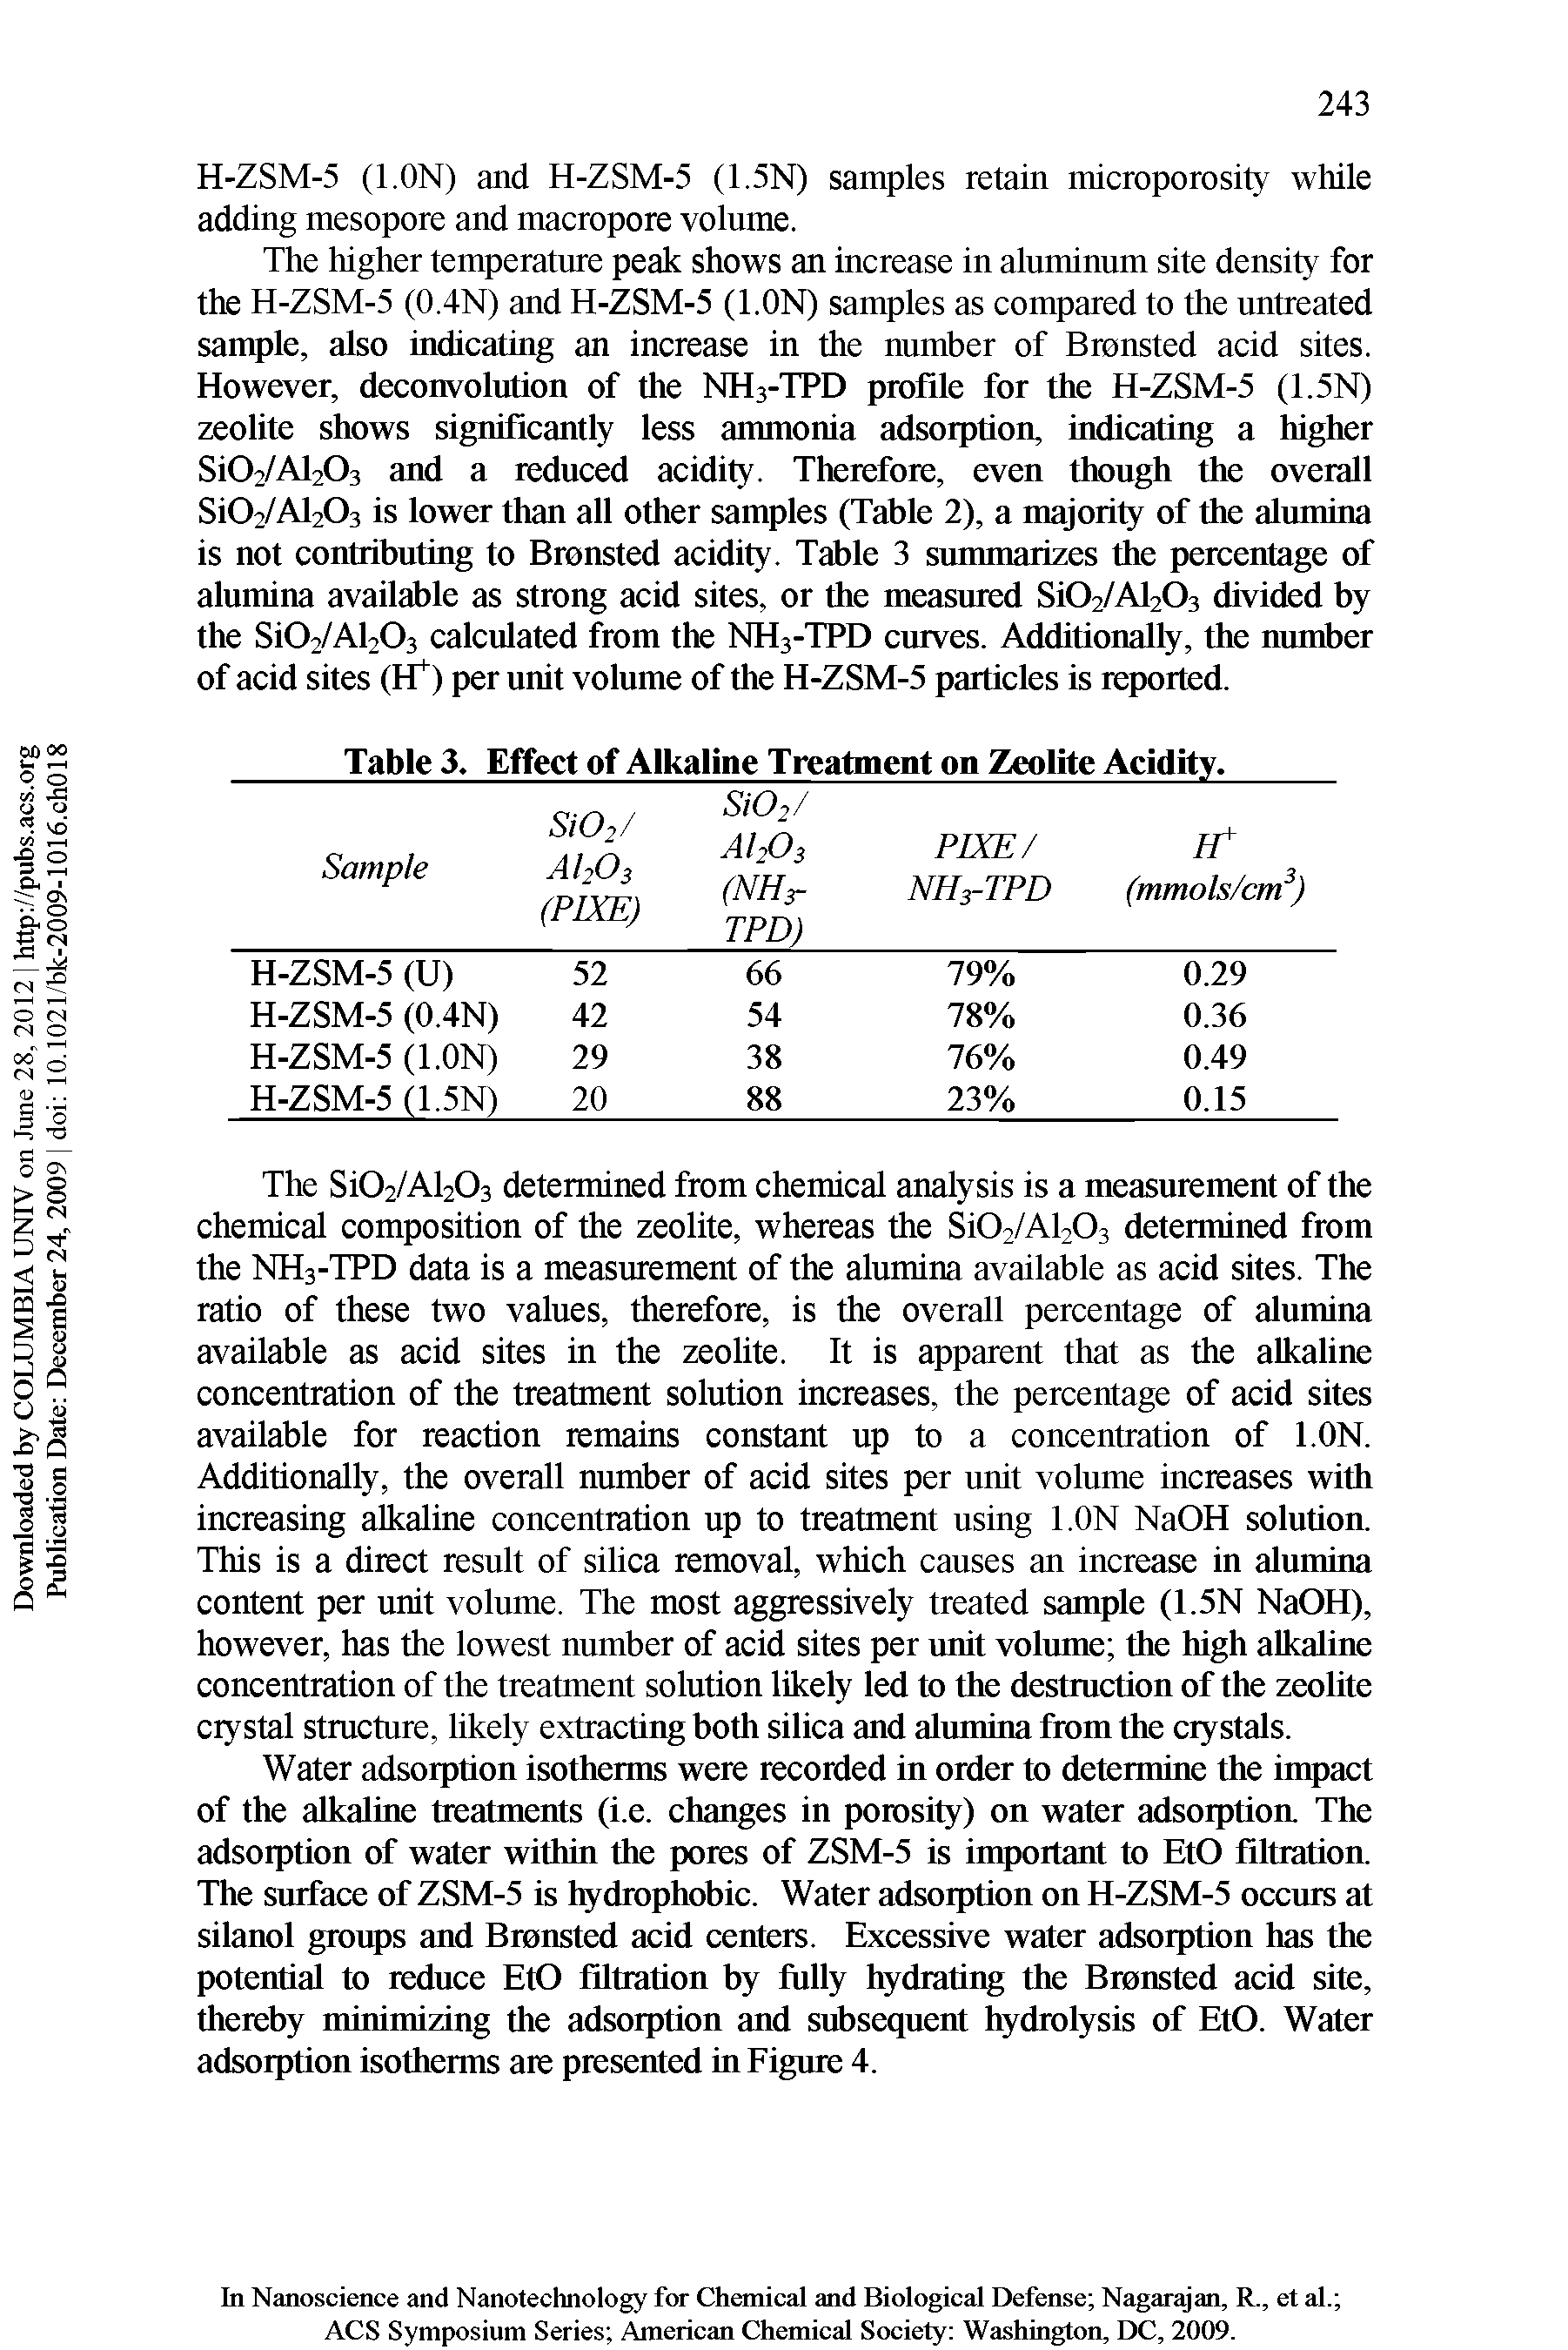 Table 3, Effect of Alkaline Treatment on Zeolite Acidity.